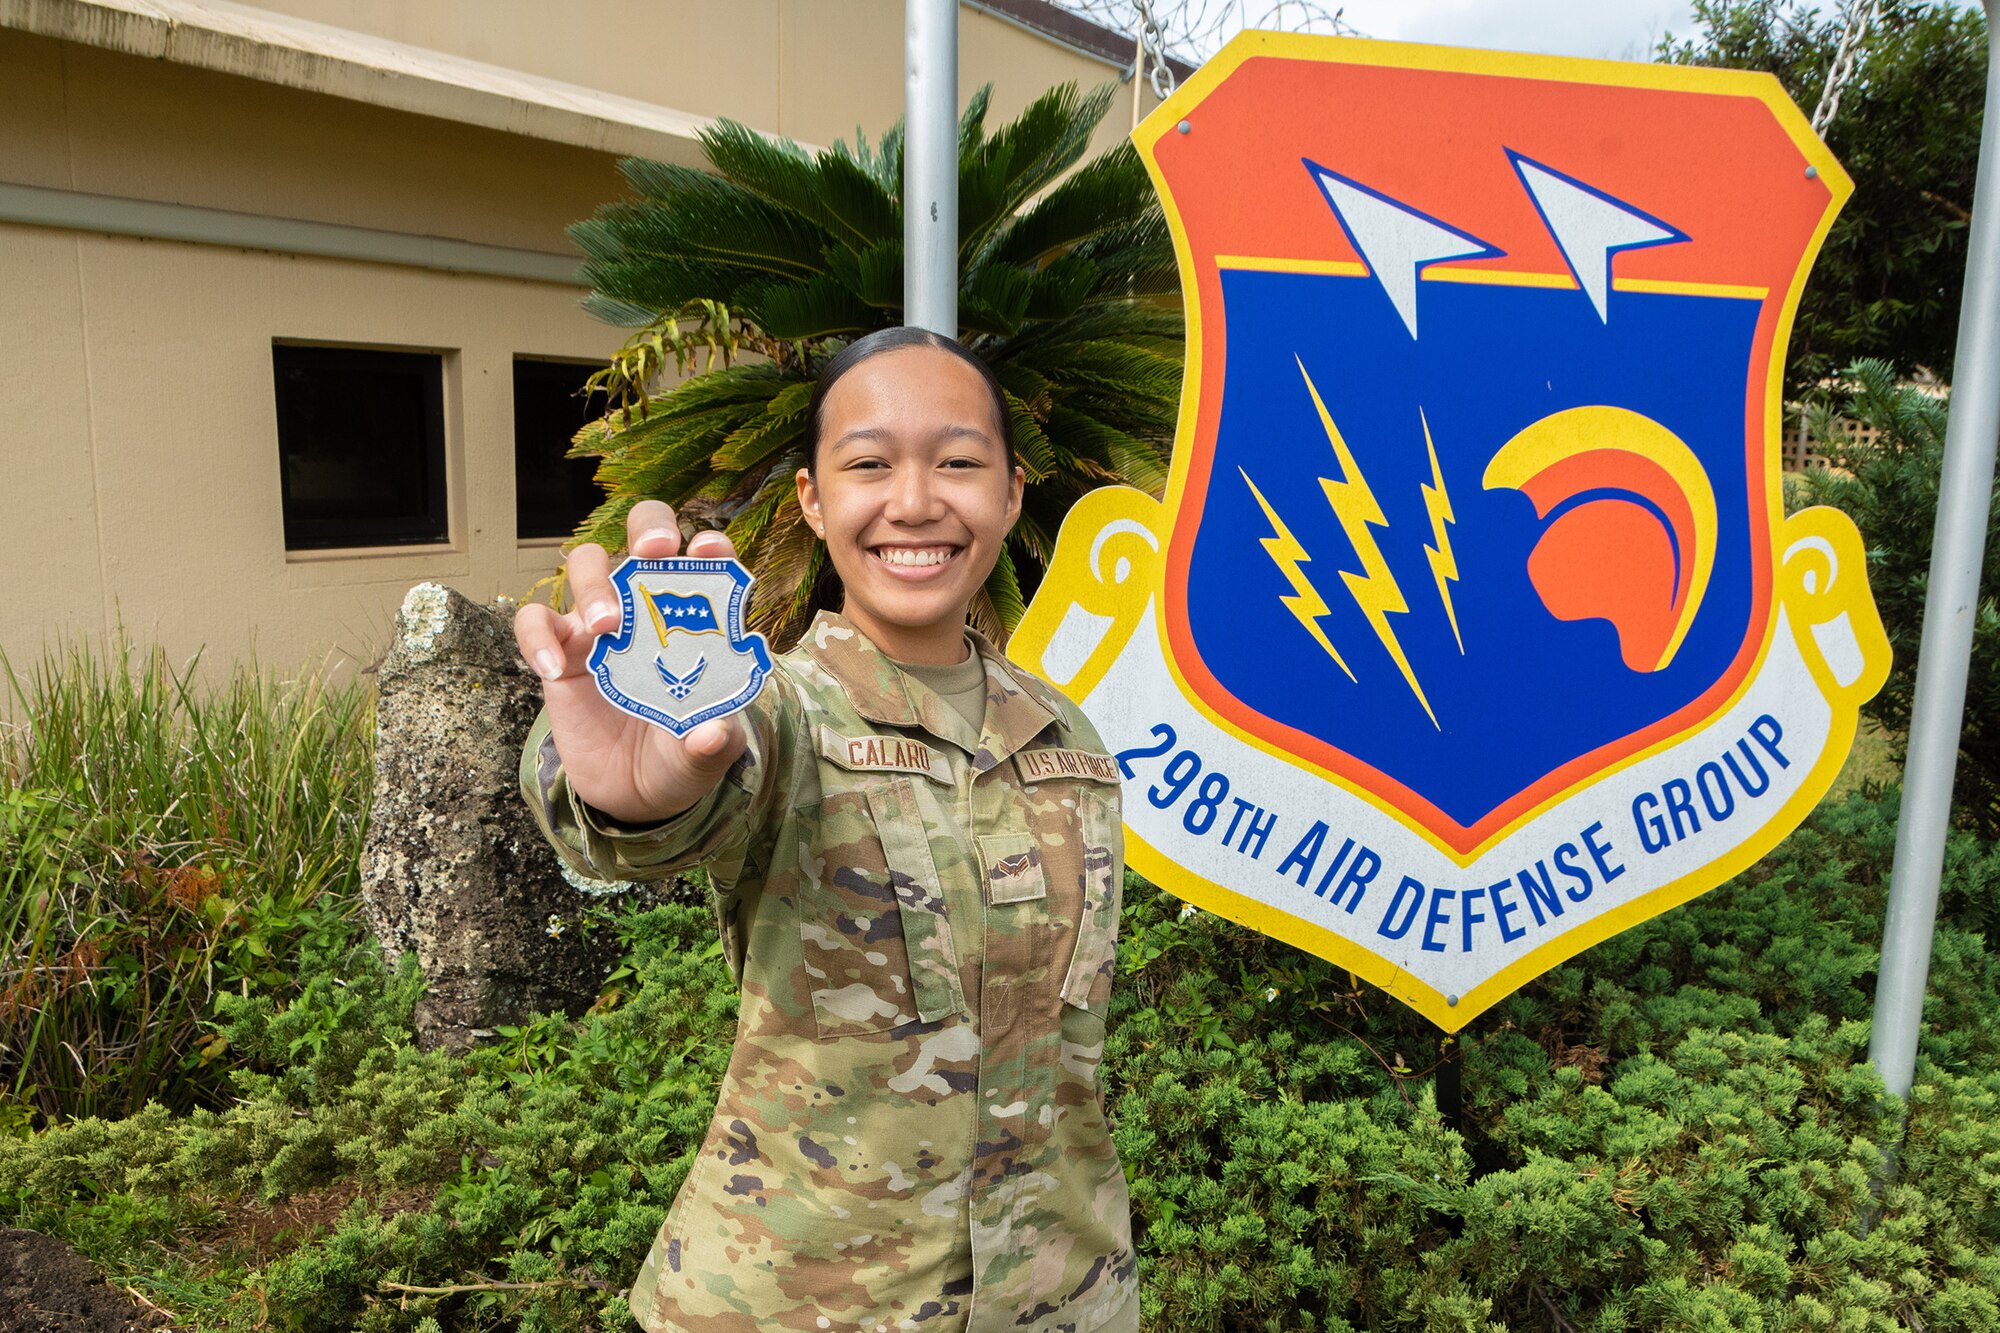 U.S. Air Force Airman 1st Class Faith Calaro, 169th Air Defense Squadron surveillance technician, displays a commander’s coin on June 3, 2023 at Wheeler Army Airfield, Hawaii.